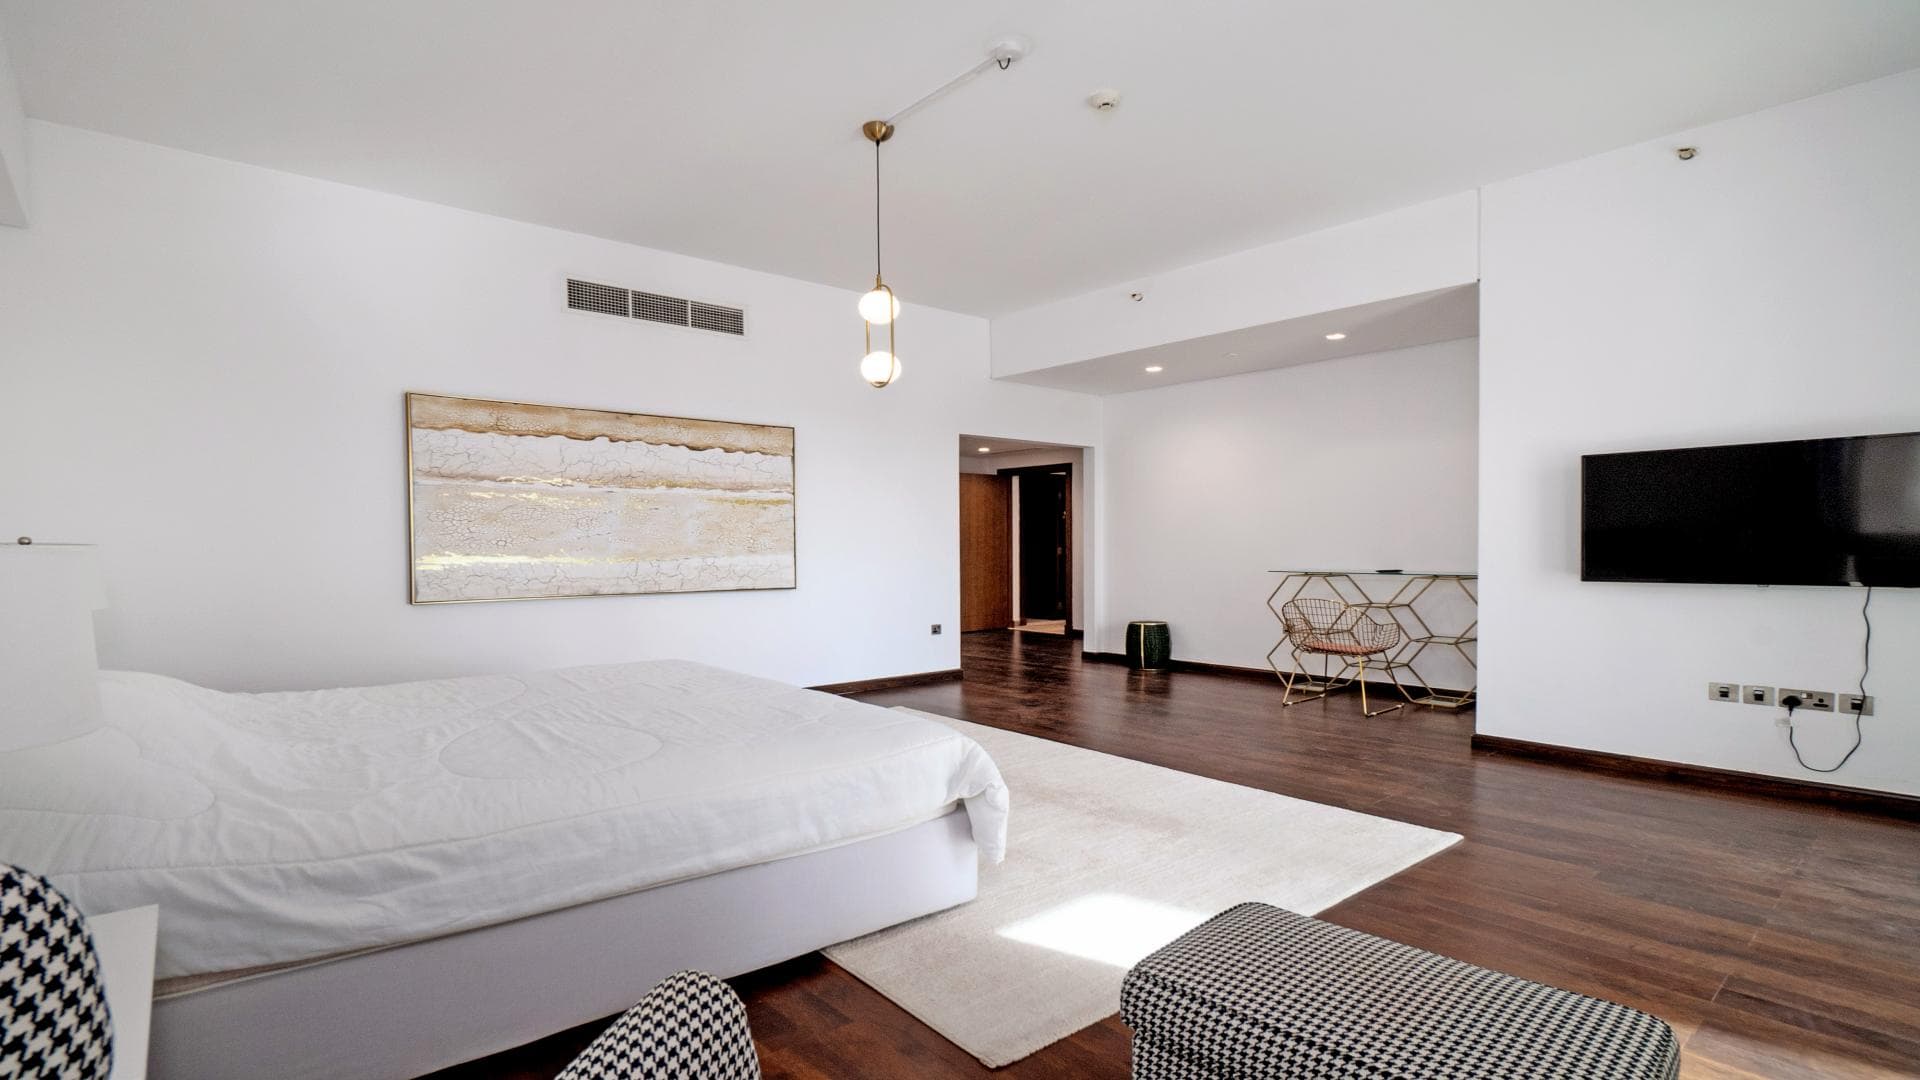 3 Bedroom Apartment For Sale Marina Residences Lp17100 20c0f47d3a89b200.jpg